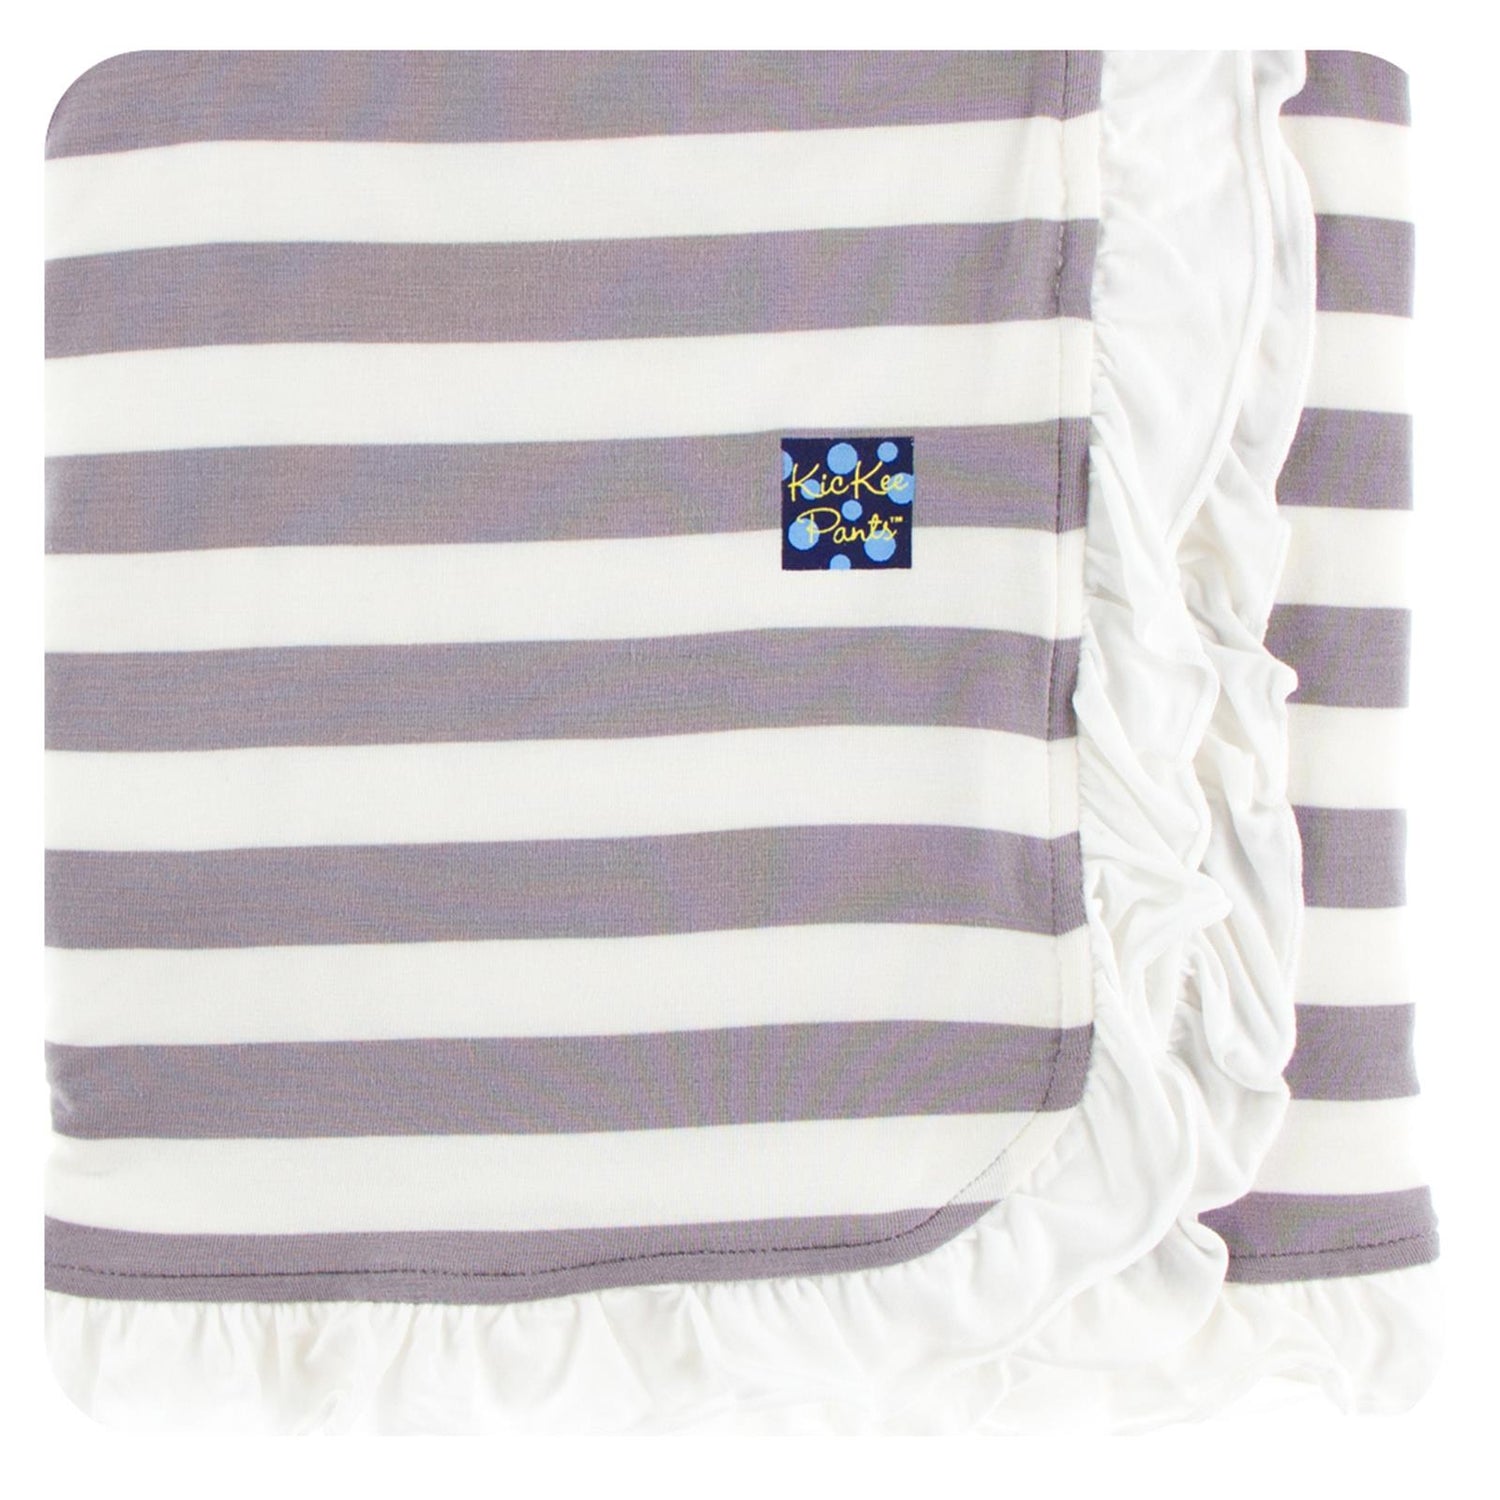 Print Ruffle Stroller Blanket in Feather Contrast Stripe